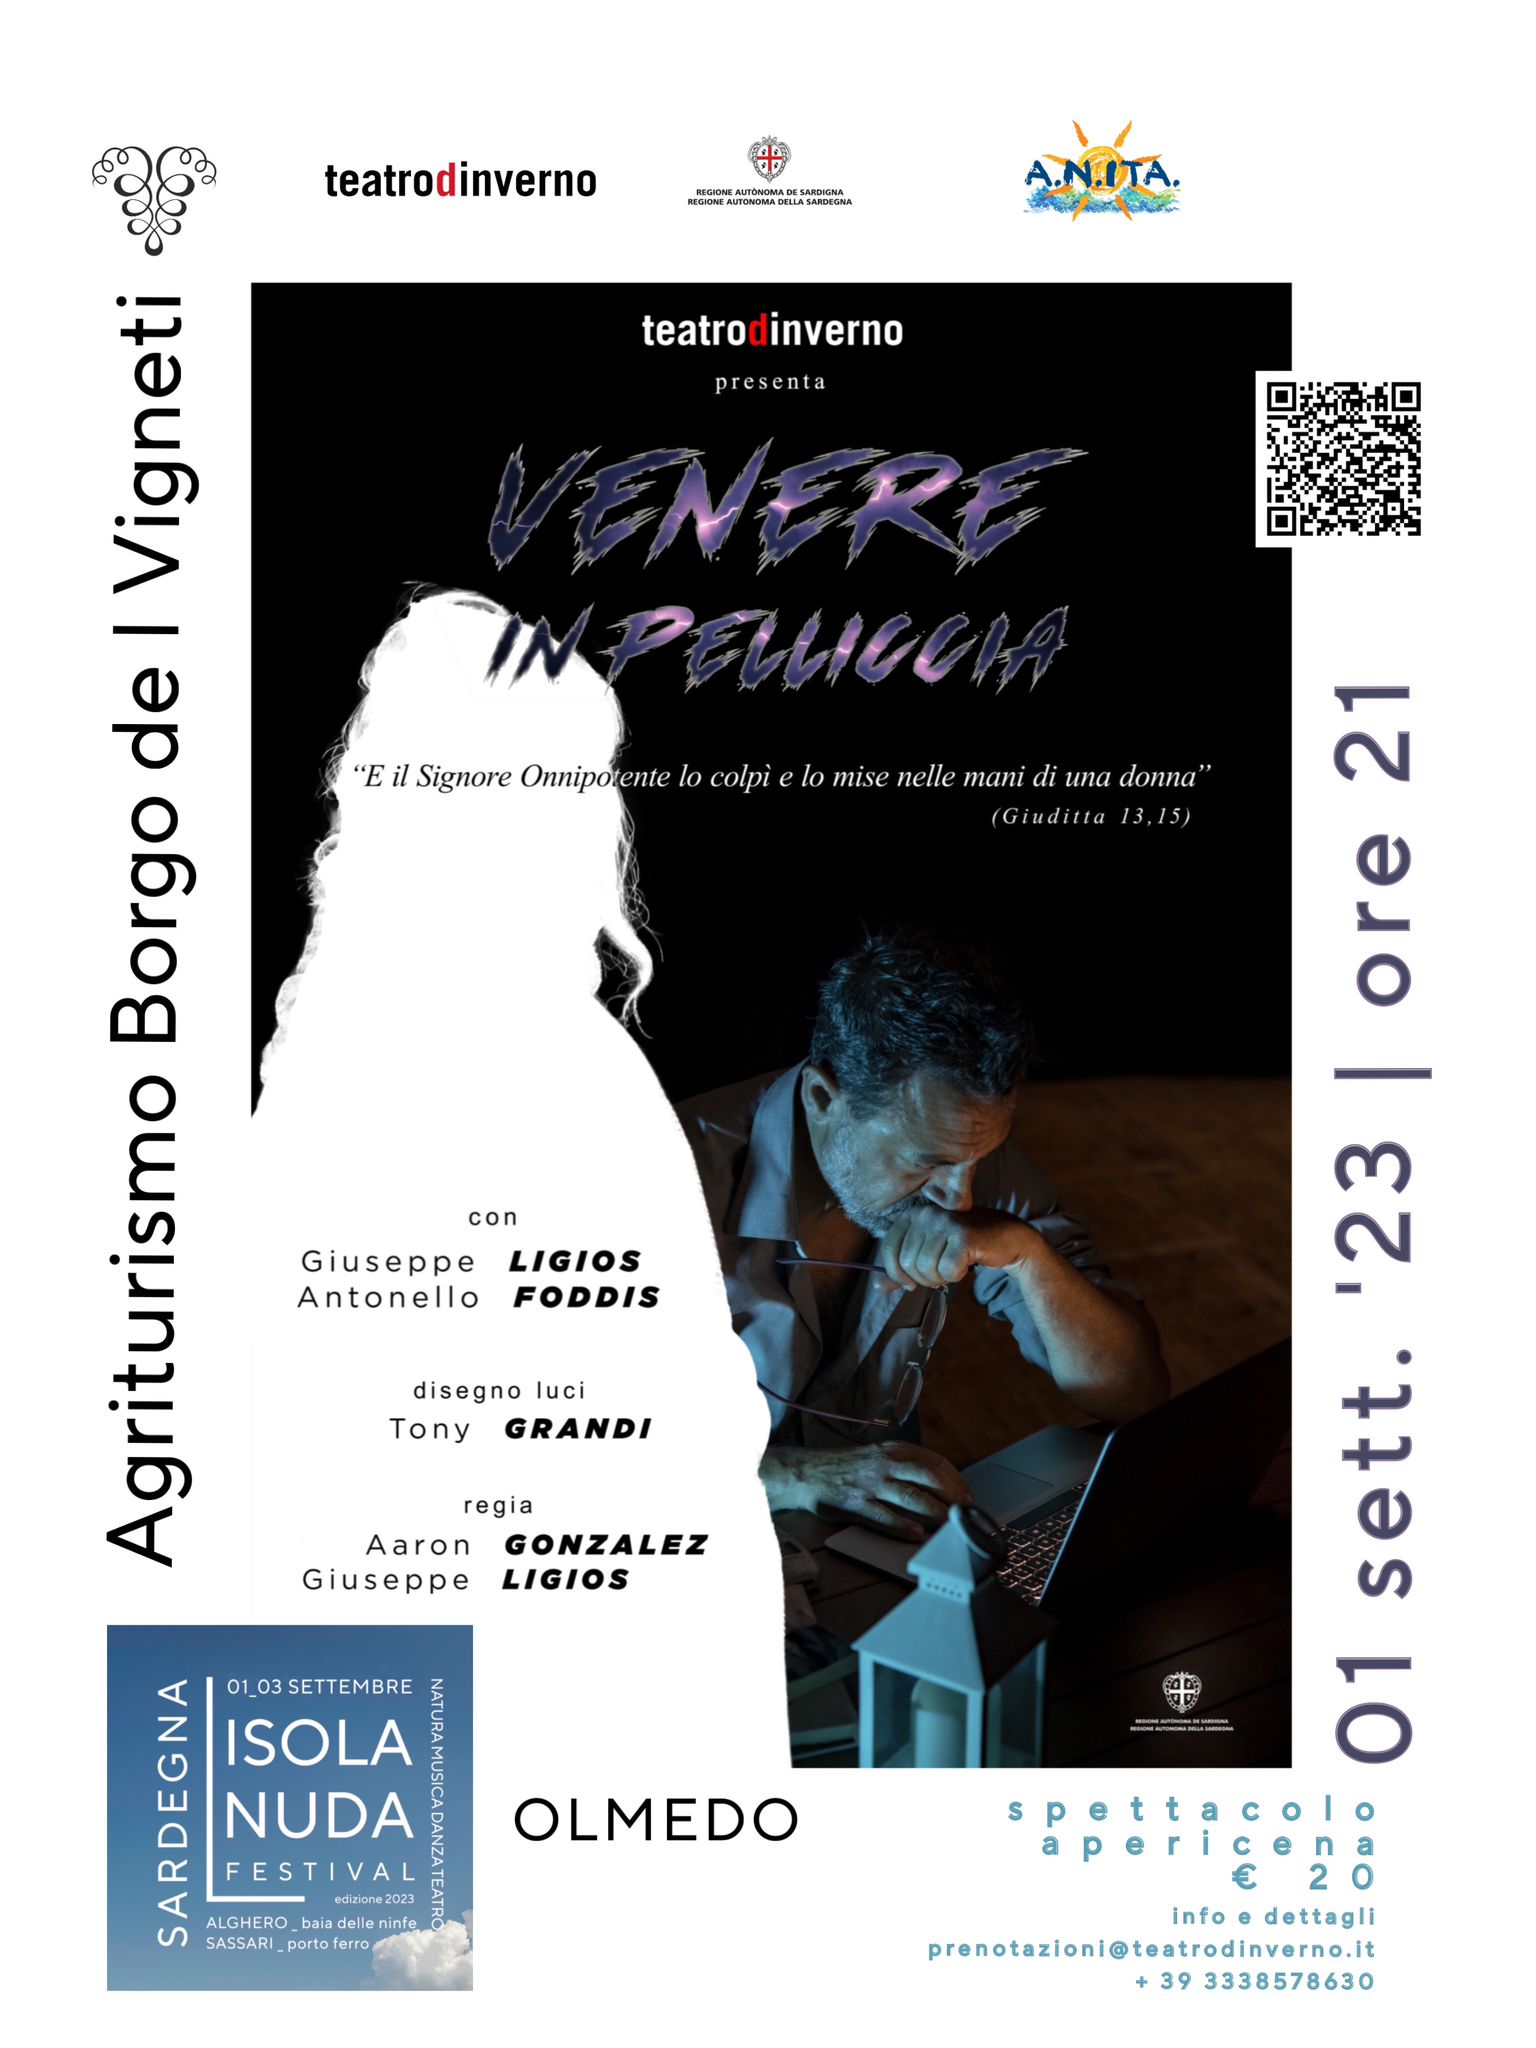 Appuntamenti, eventi, spettacoli Alghero: Venere in Pelliccia